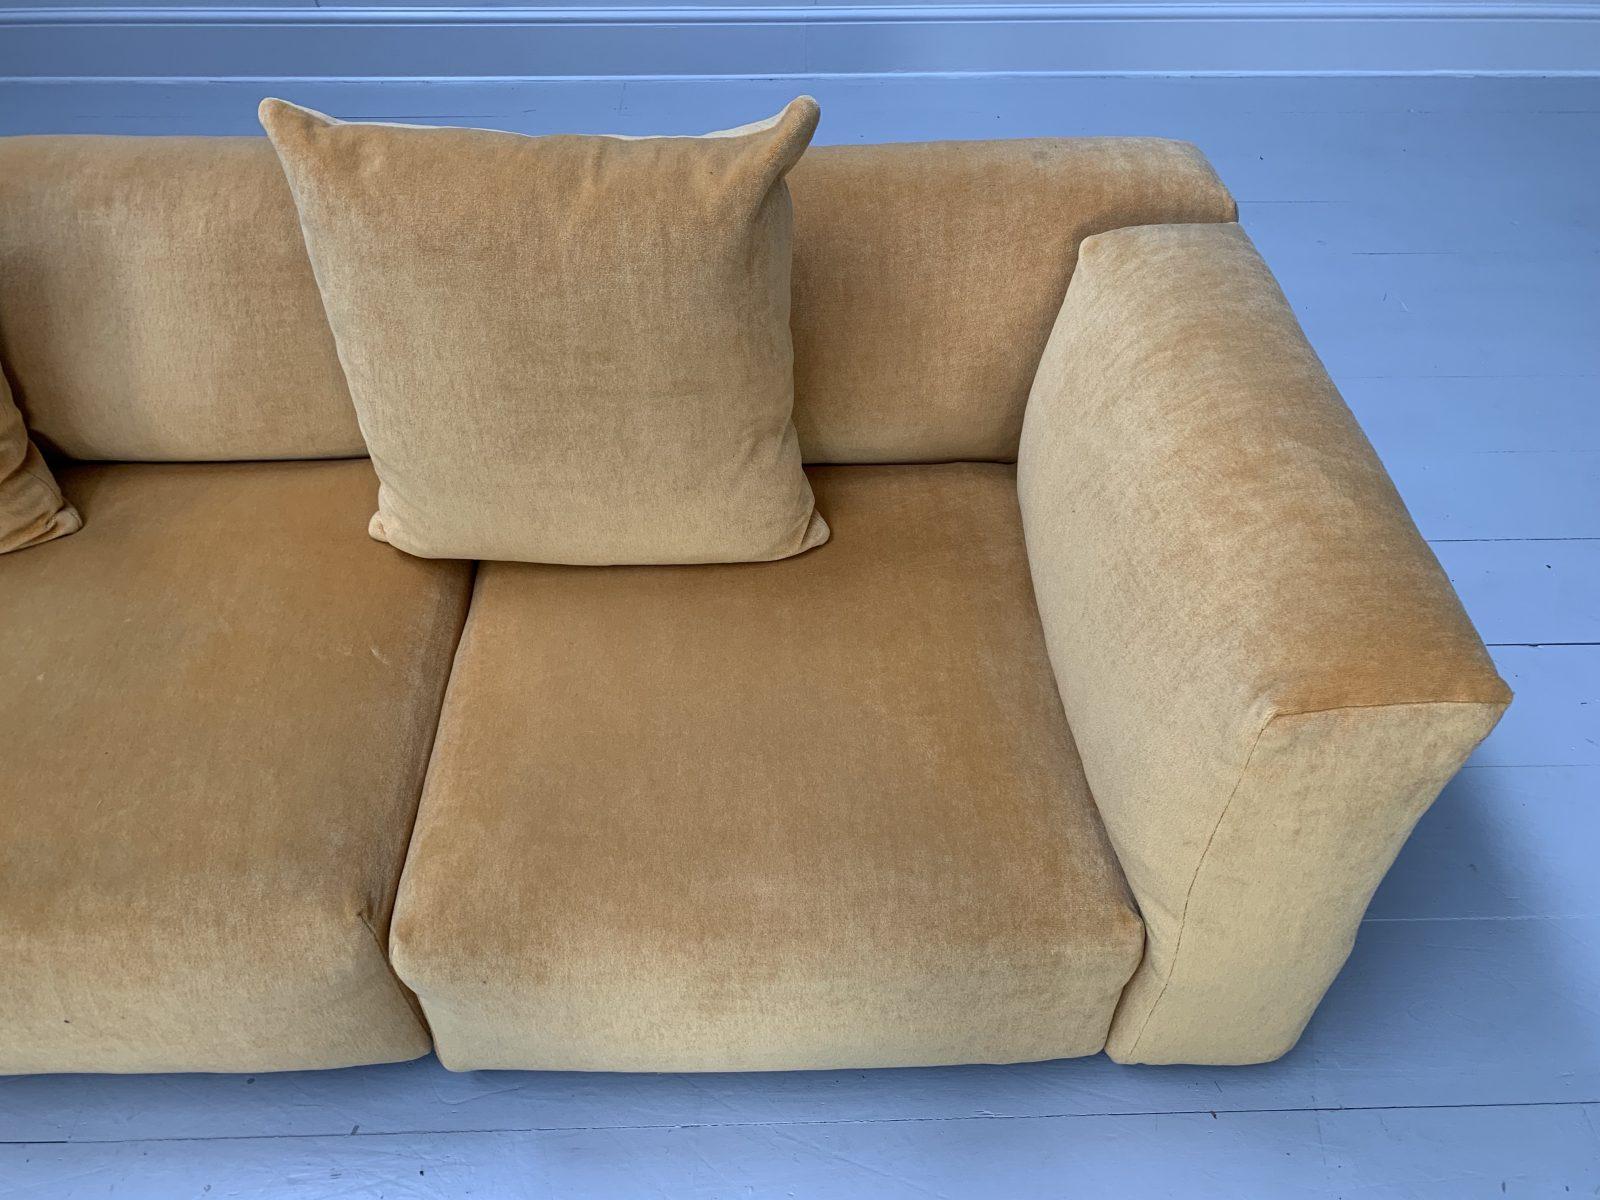 Cassina “271 Mex Cube” 4-Seat Sectional Sofa in Gold Mohair Velvet For Sale 3